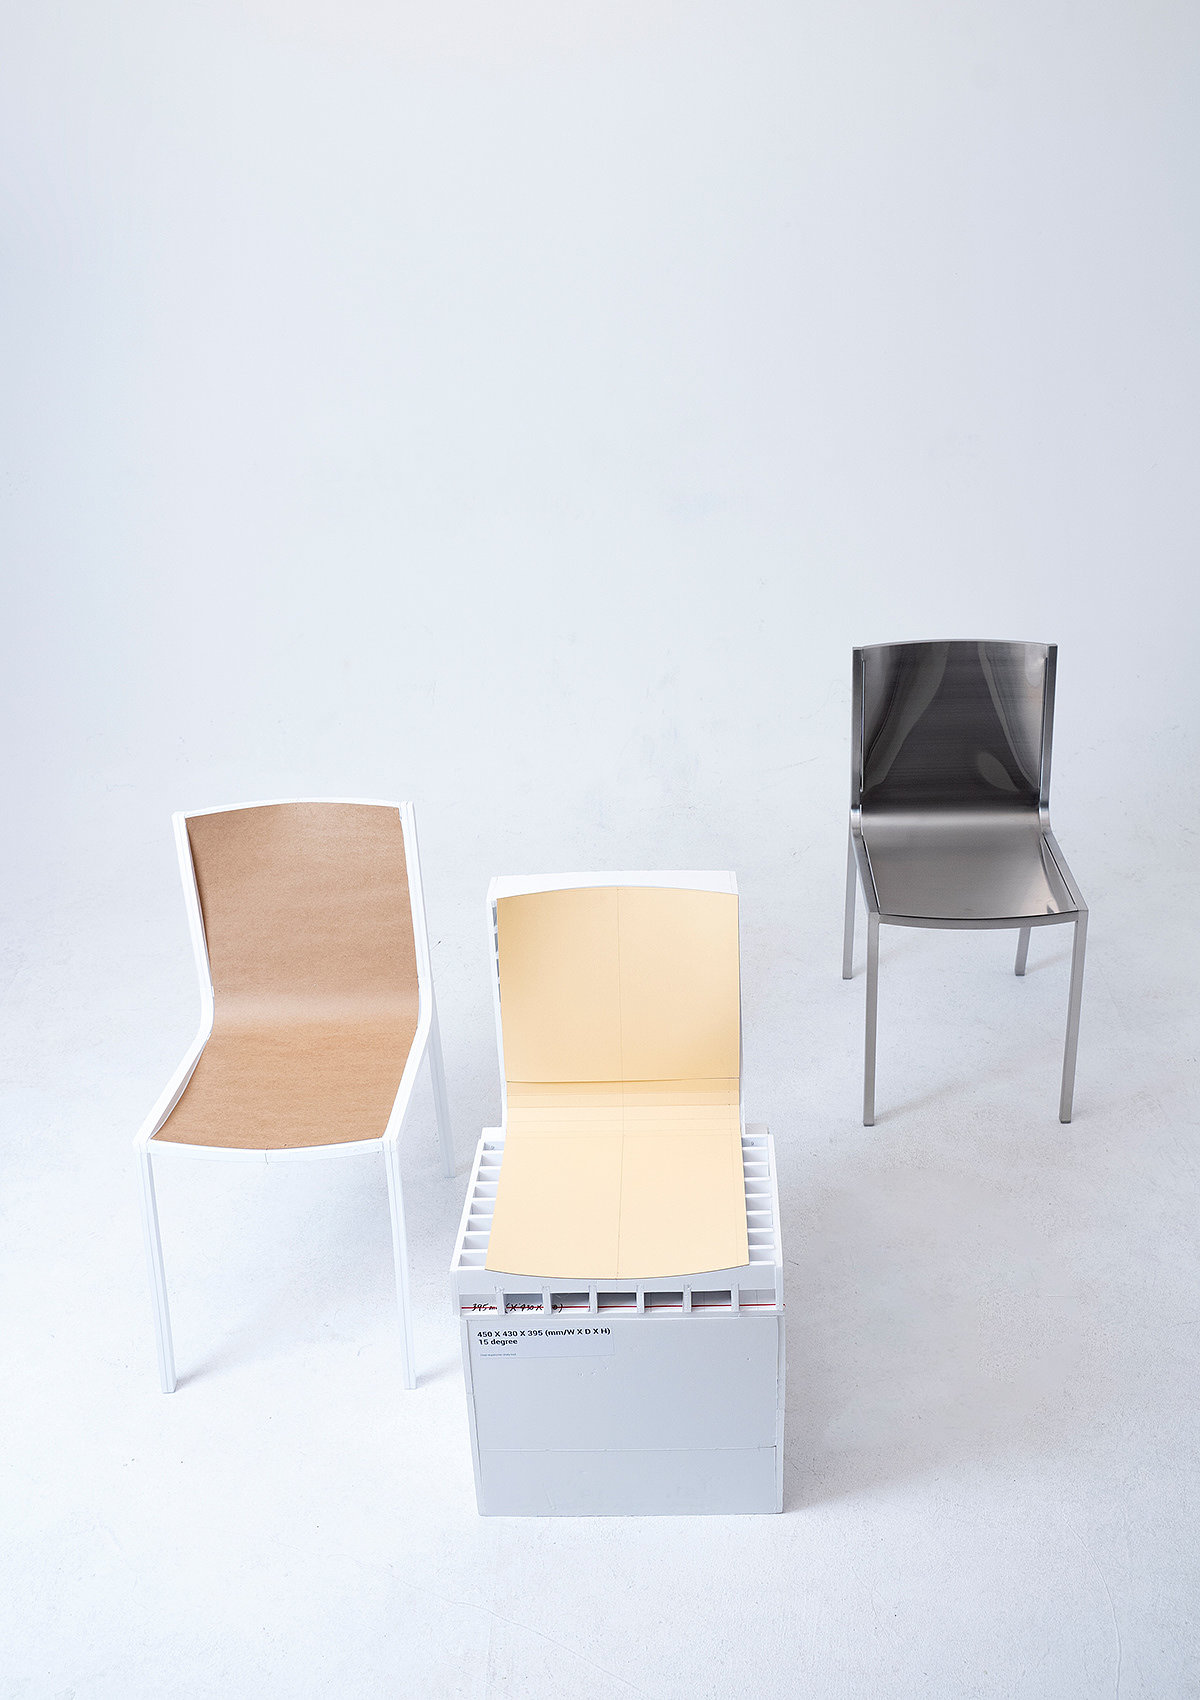 Plate Chair，椅子，家具，工业设计，